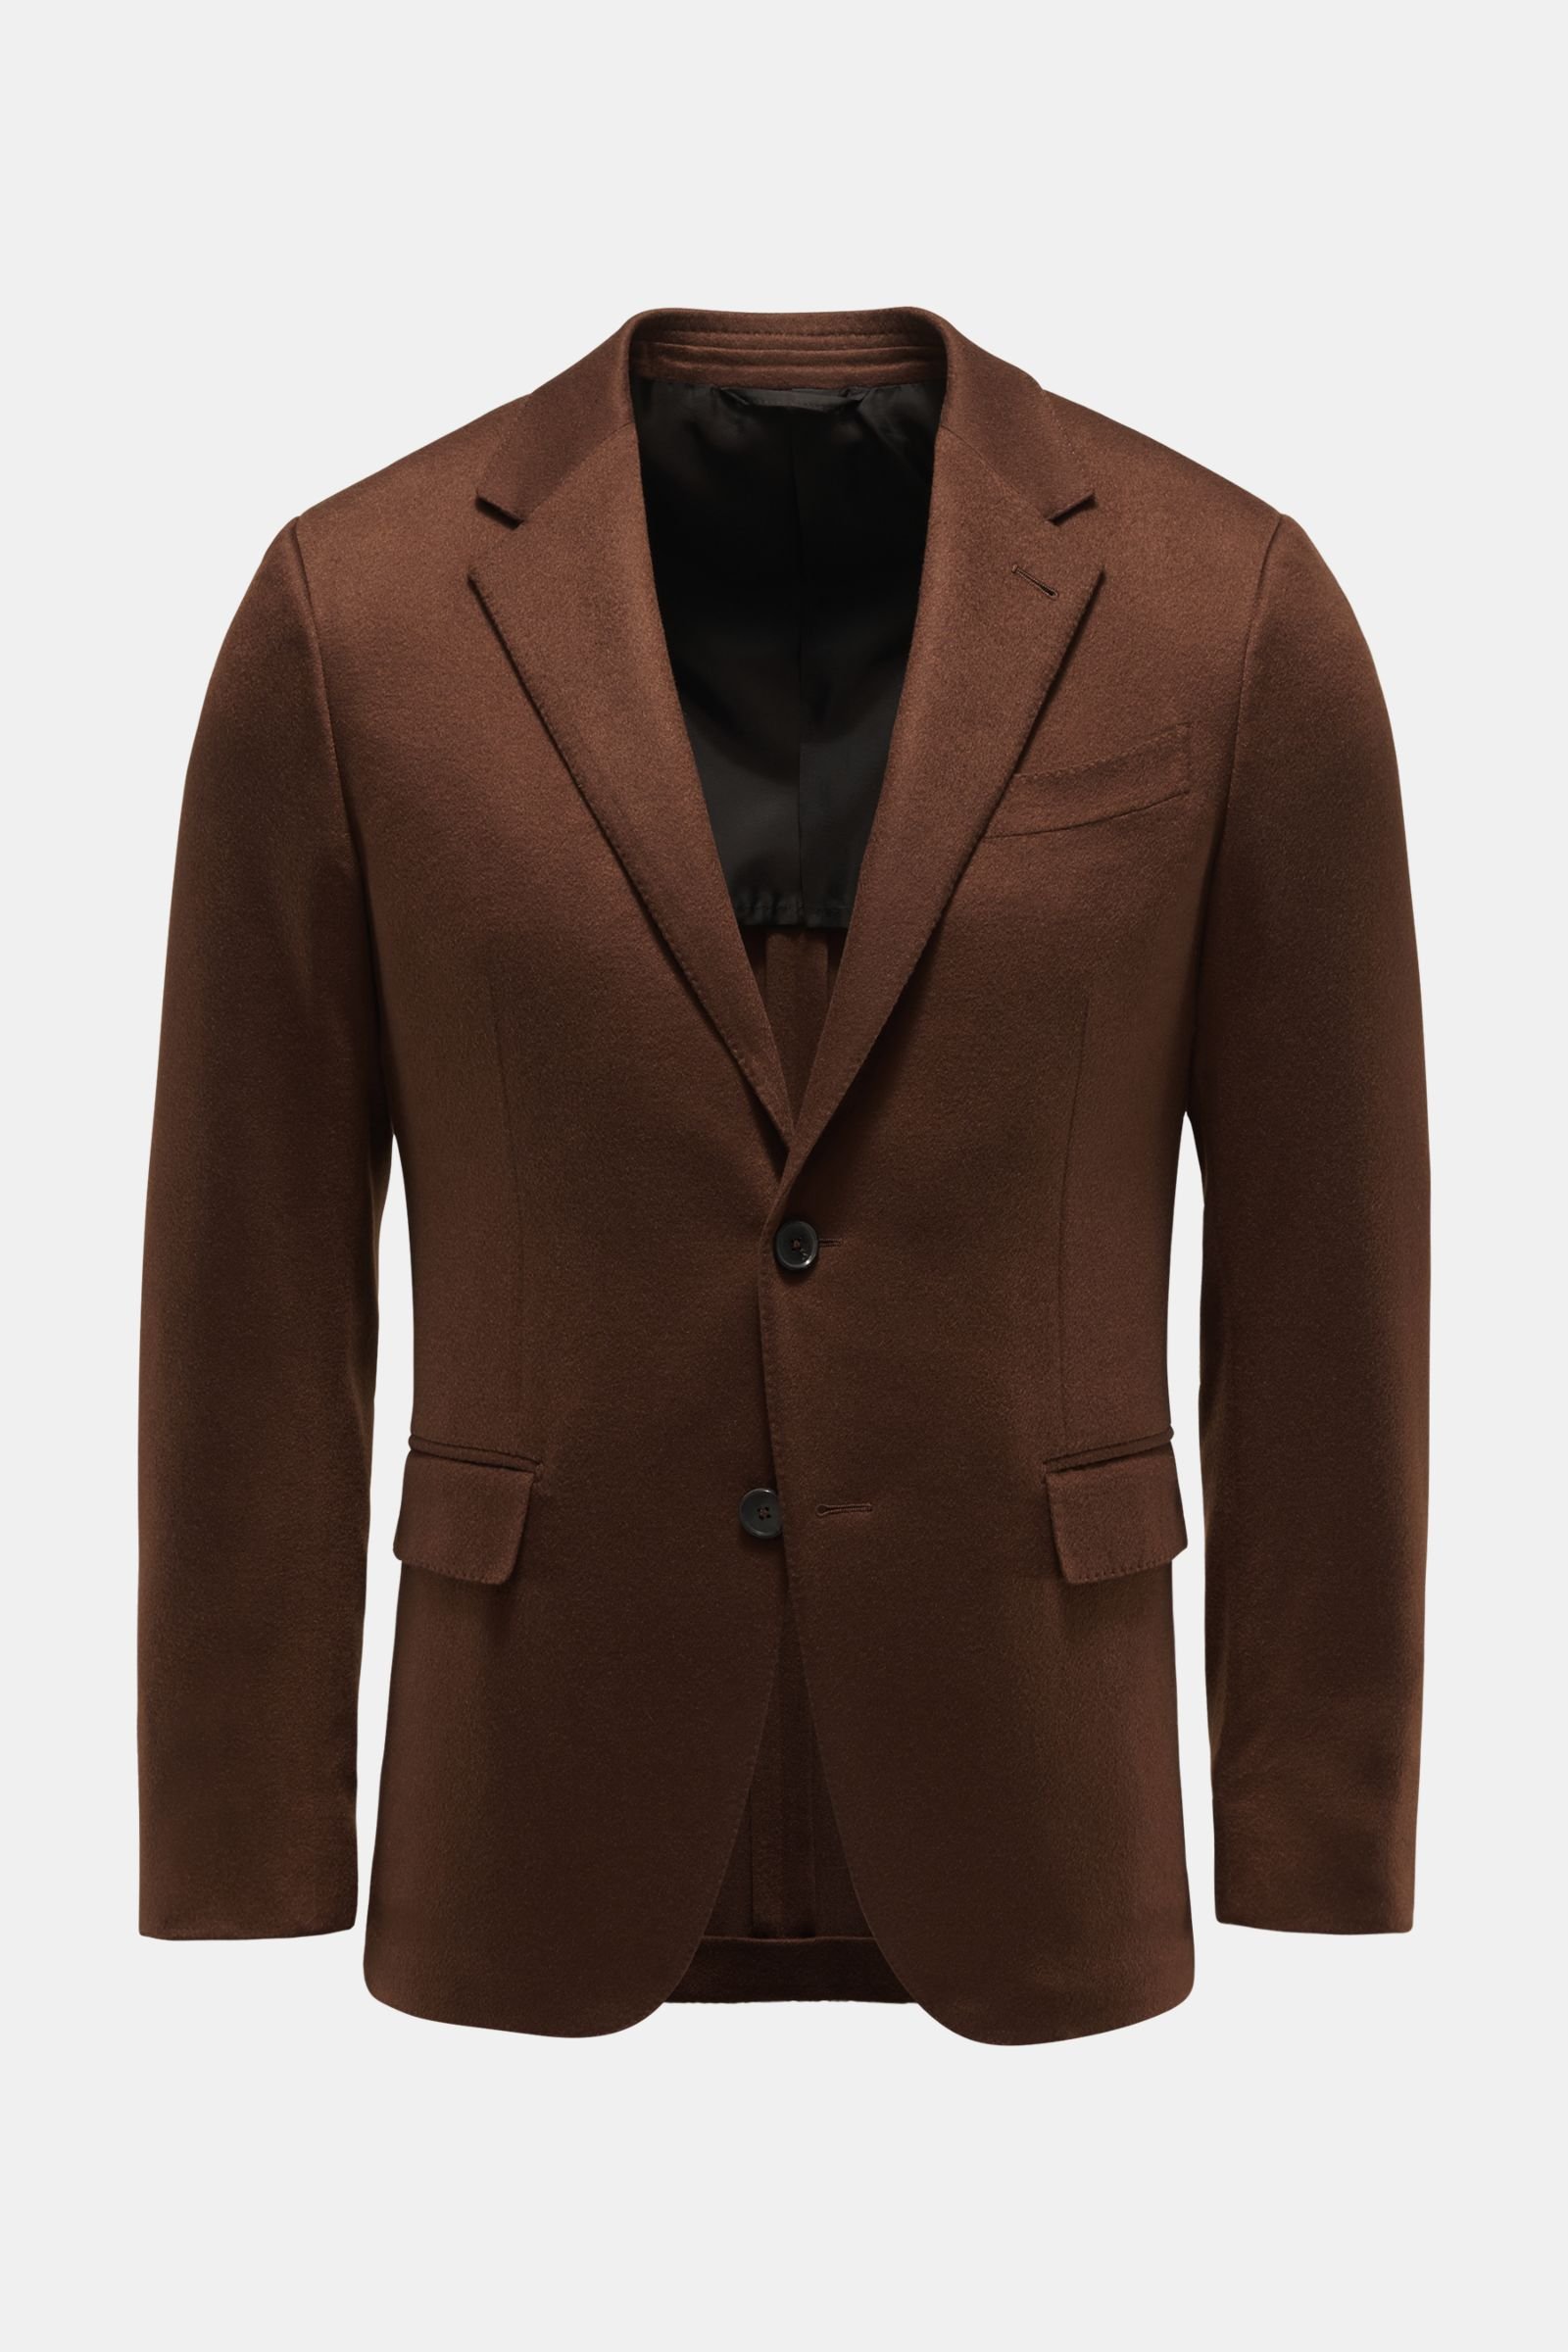 ERMENEGILDO ZEGNA cashmere jacket 'Easy Light' dark brown | BRAUN Hamburg